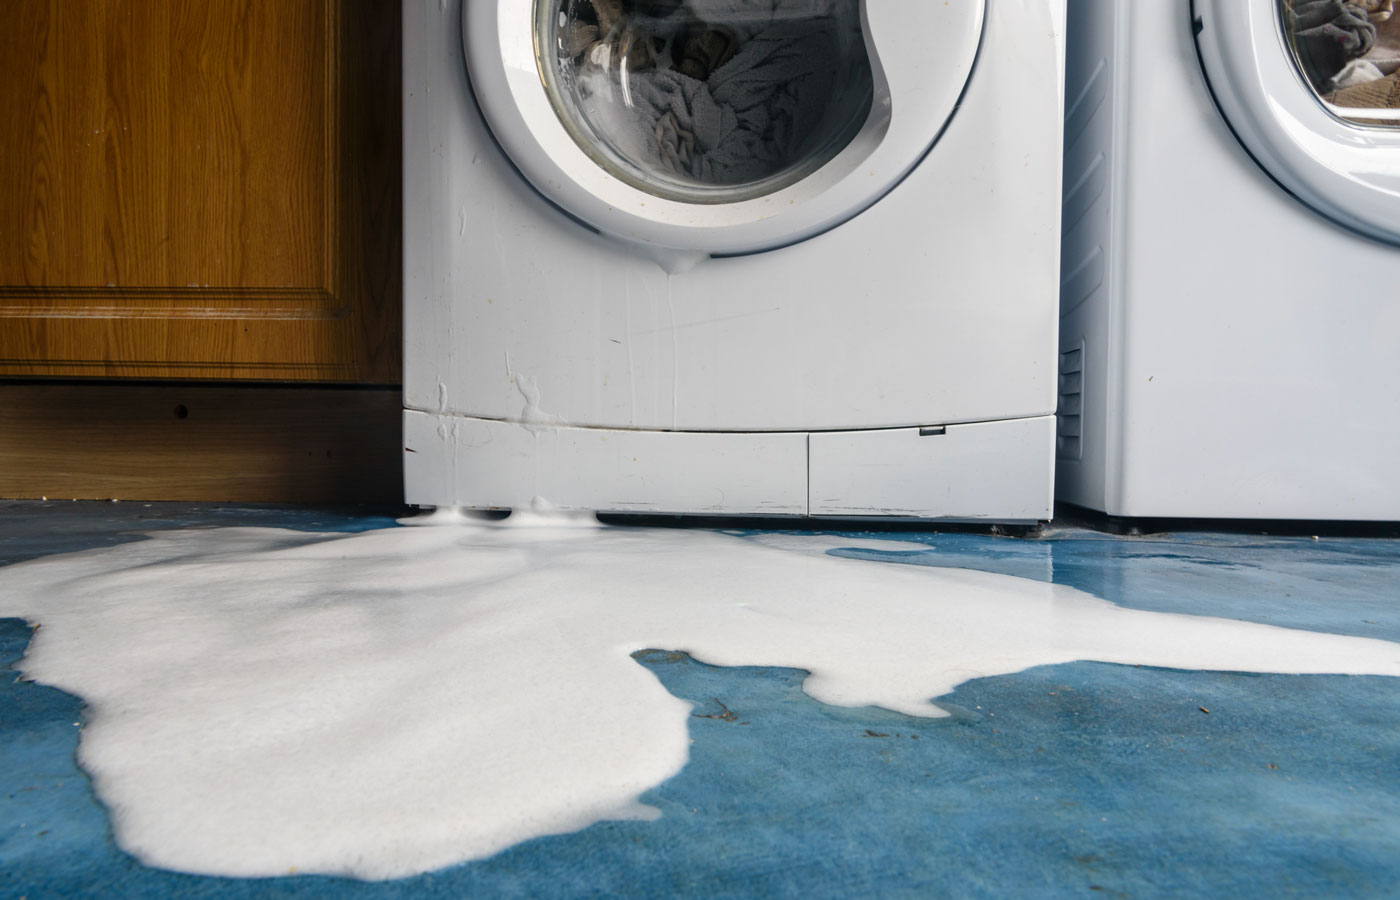 leaking washing machine in a home